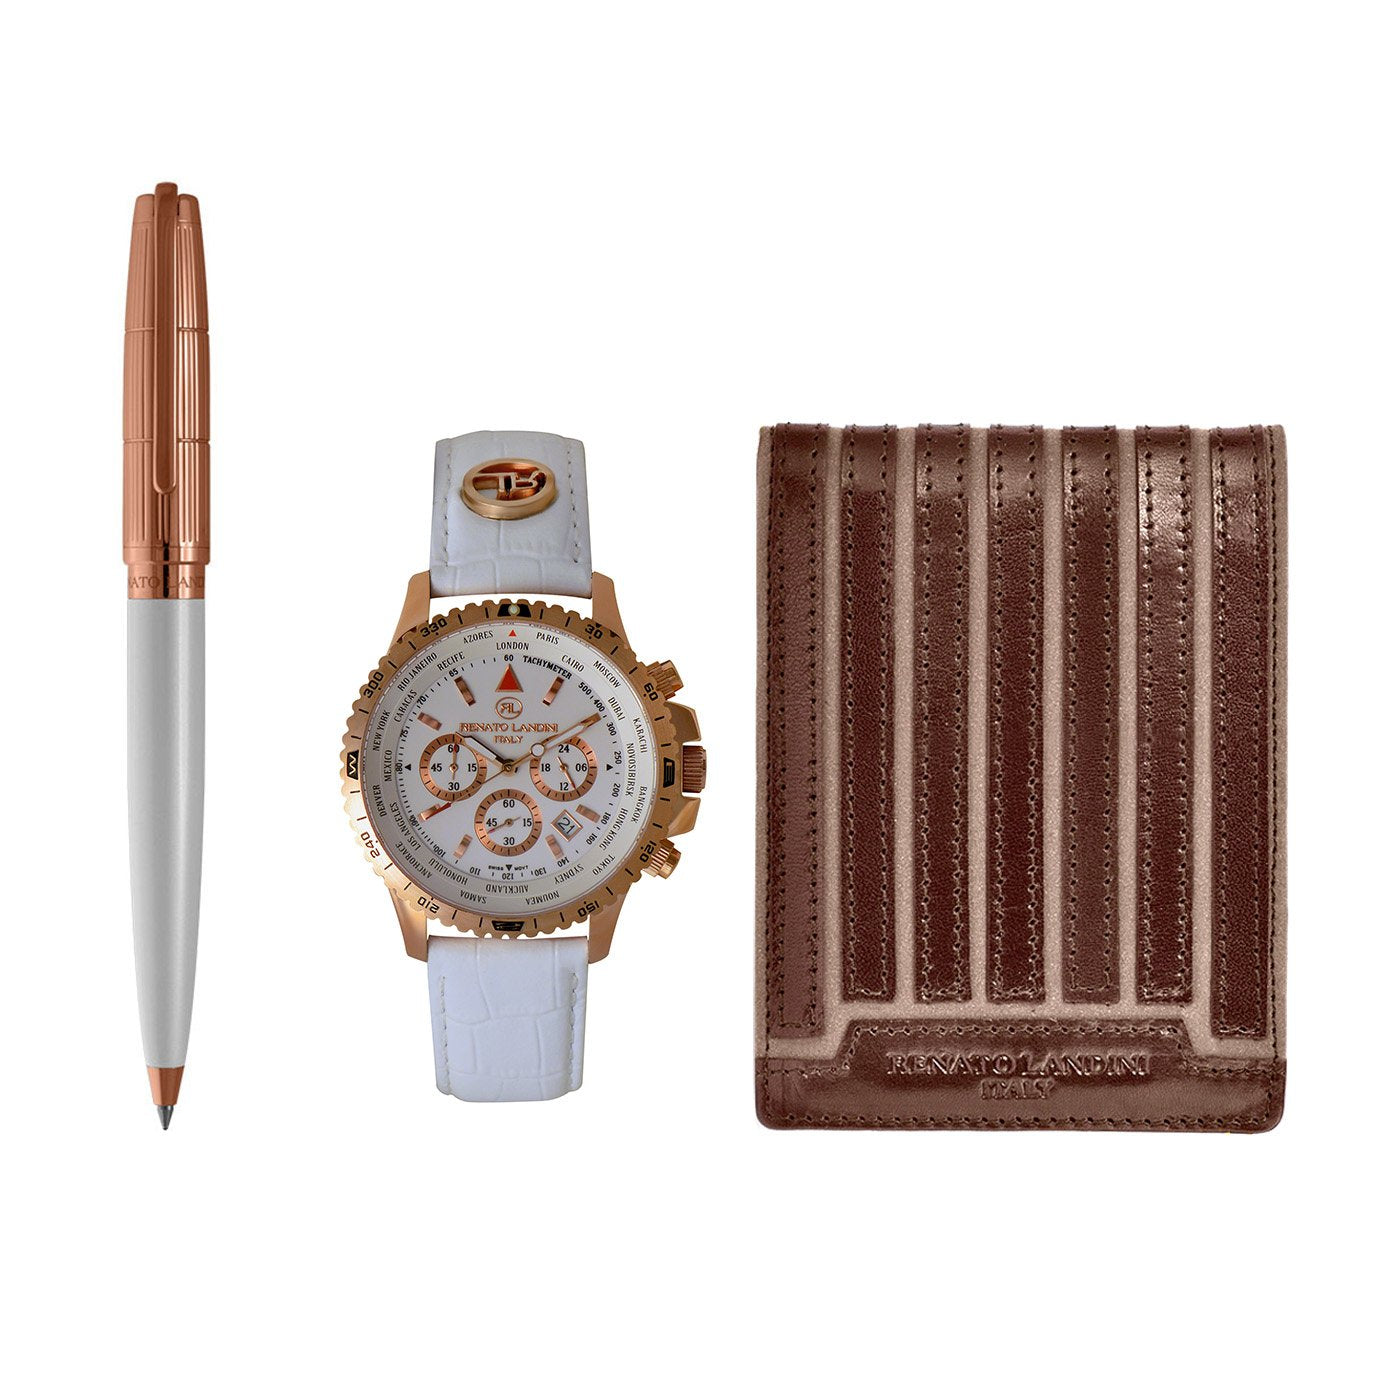 RENATO LANDINI Pen + Wallet + Watch